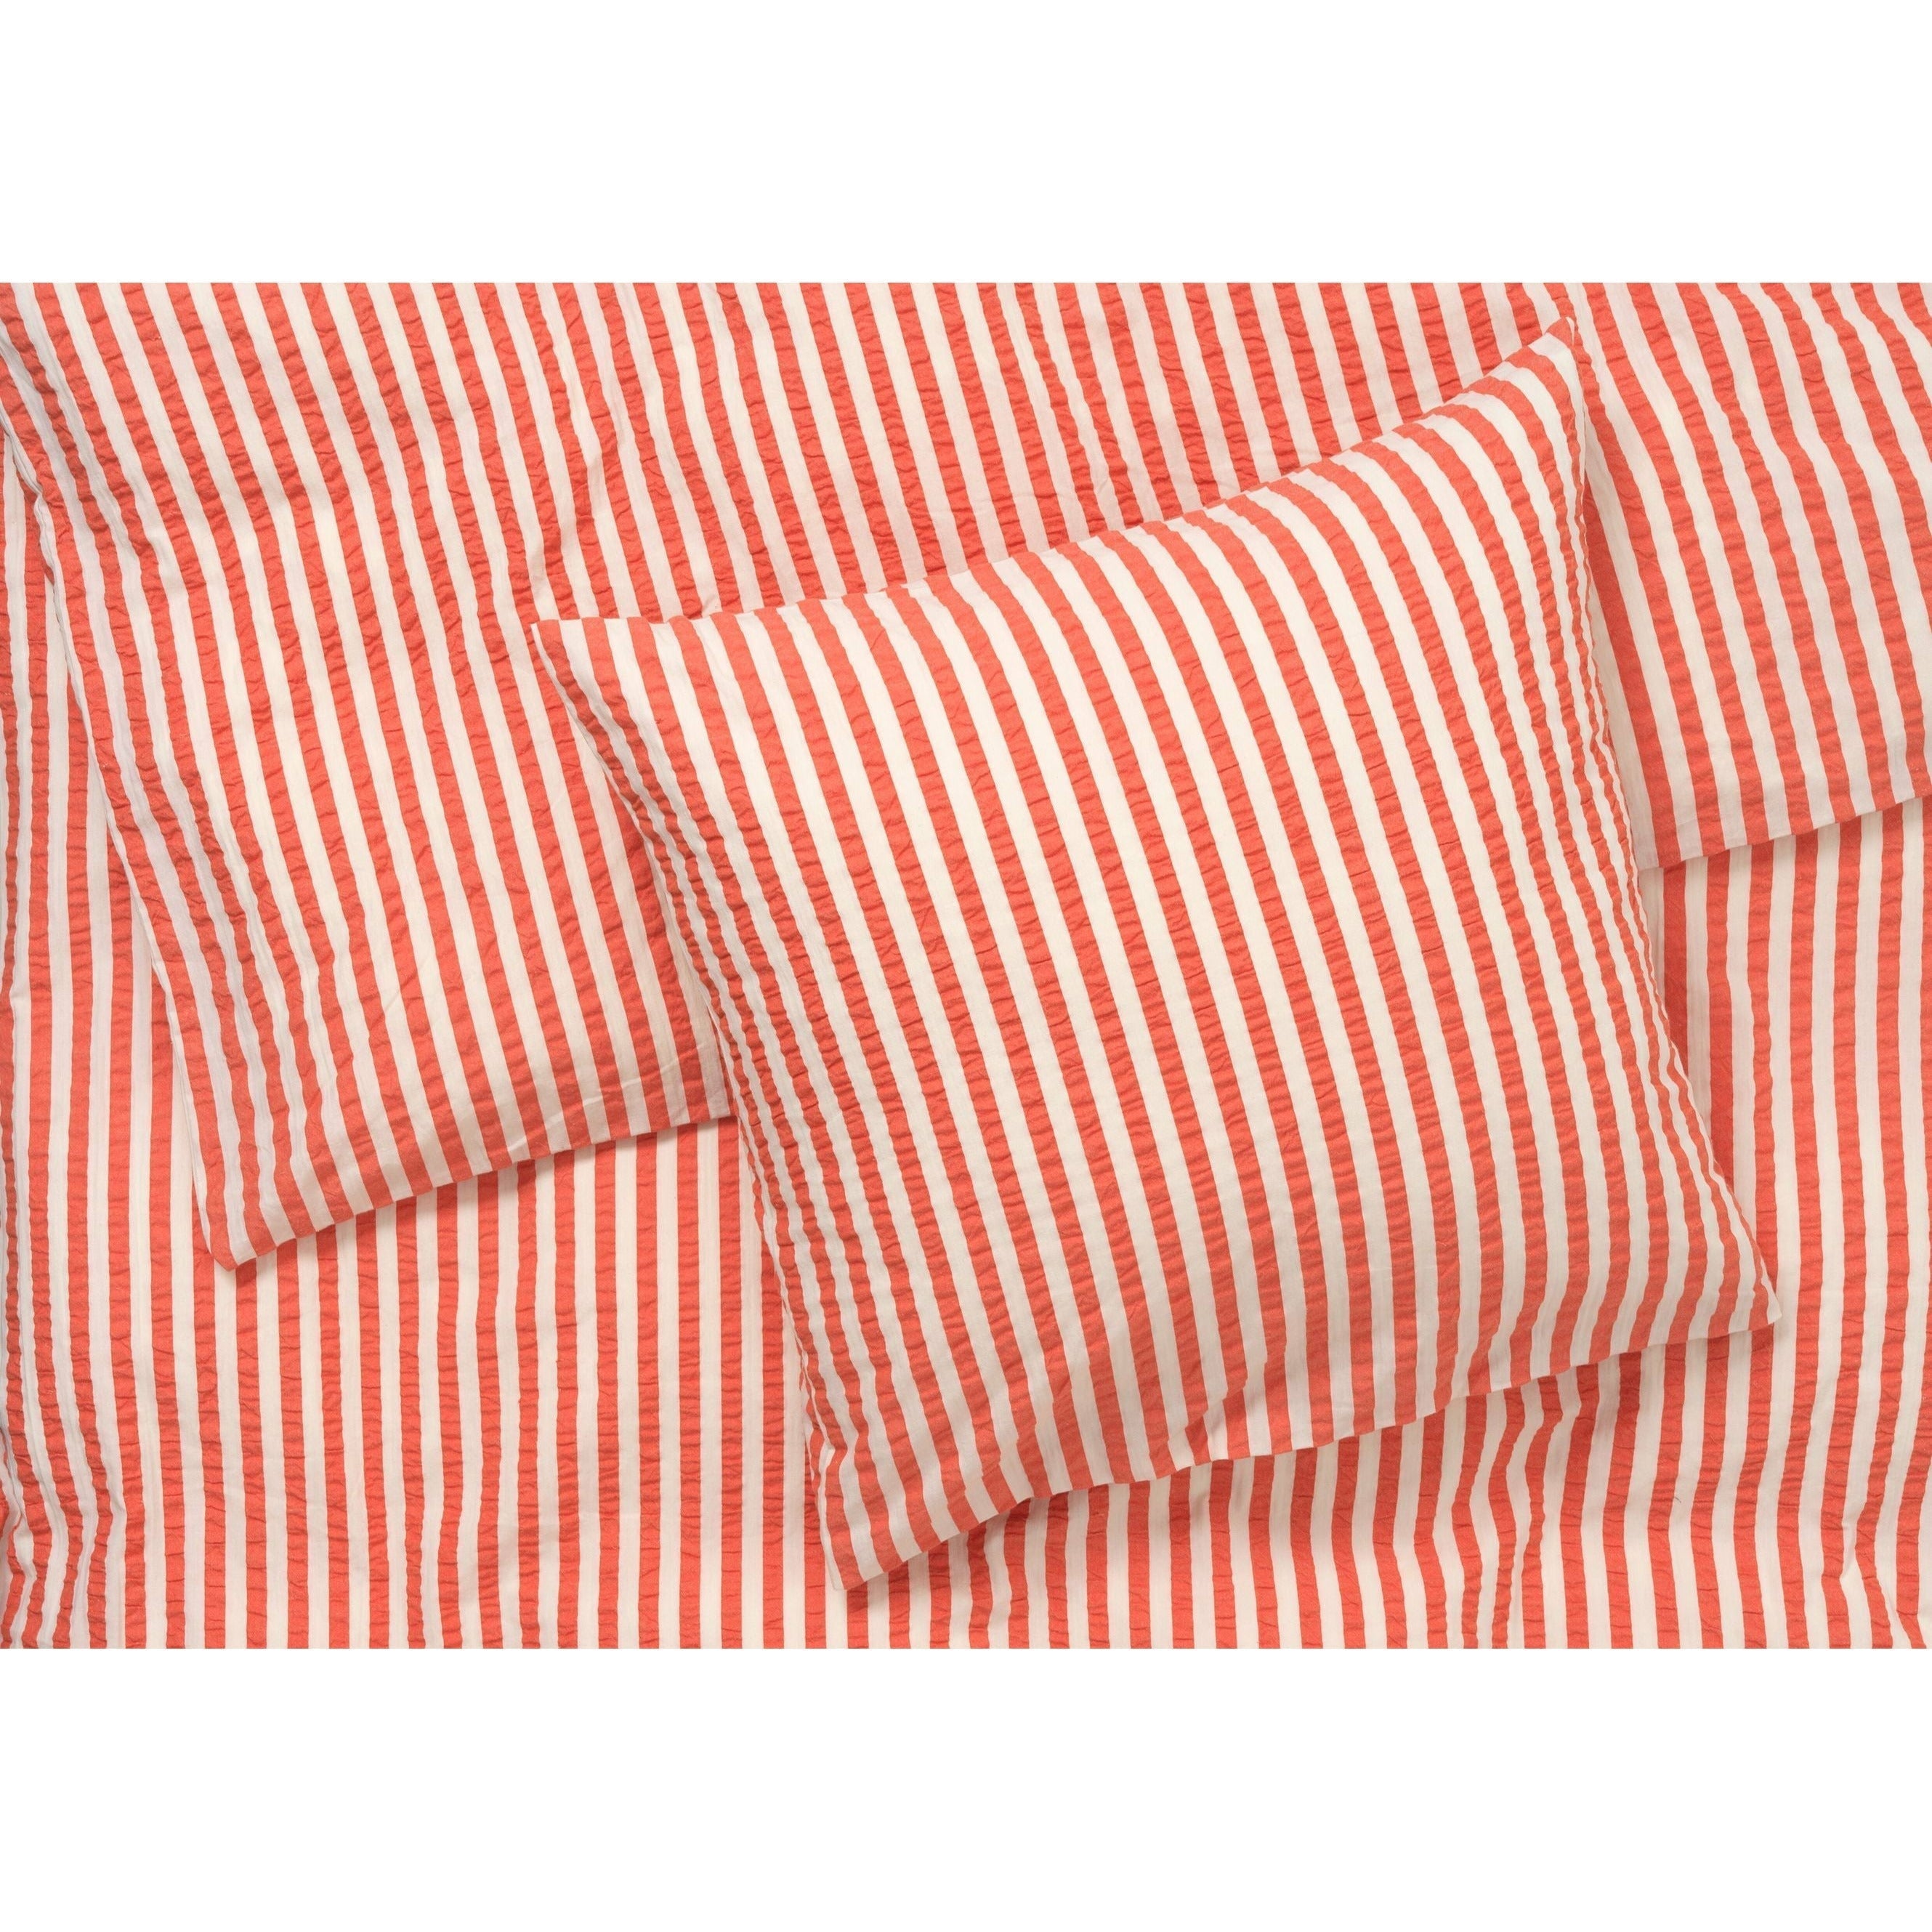 Juna Bæk & Wave Lines sängkläder 200x220 cm, chili/björk